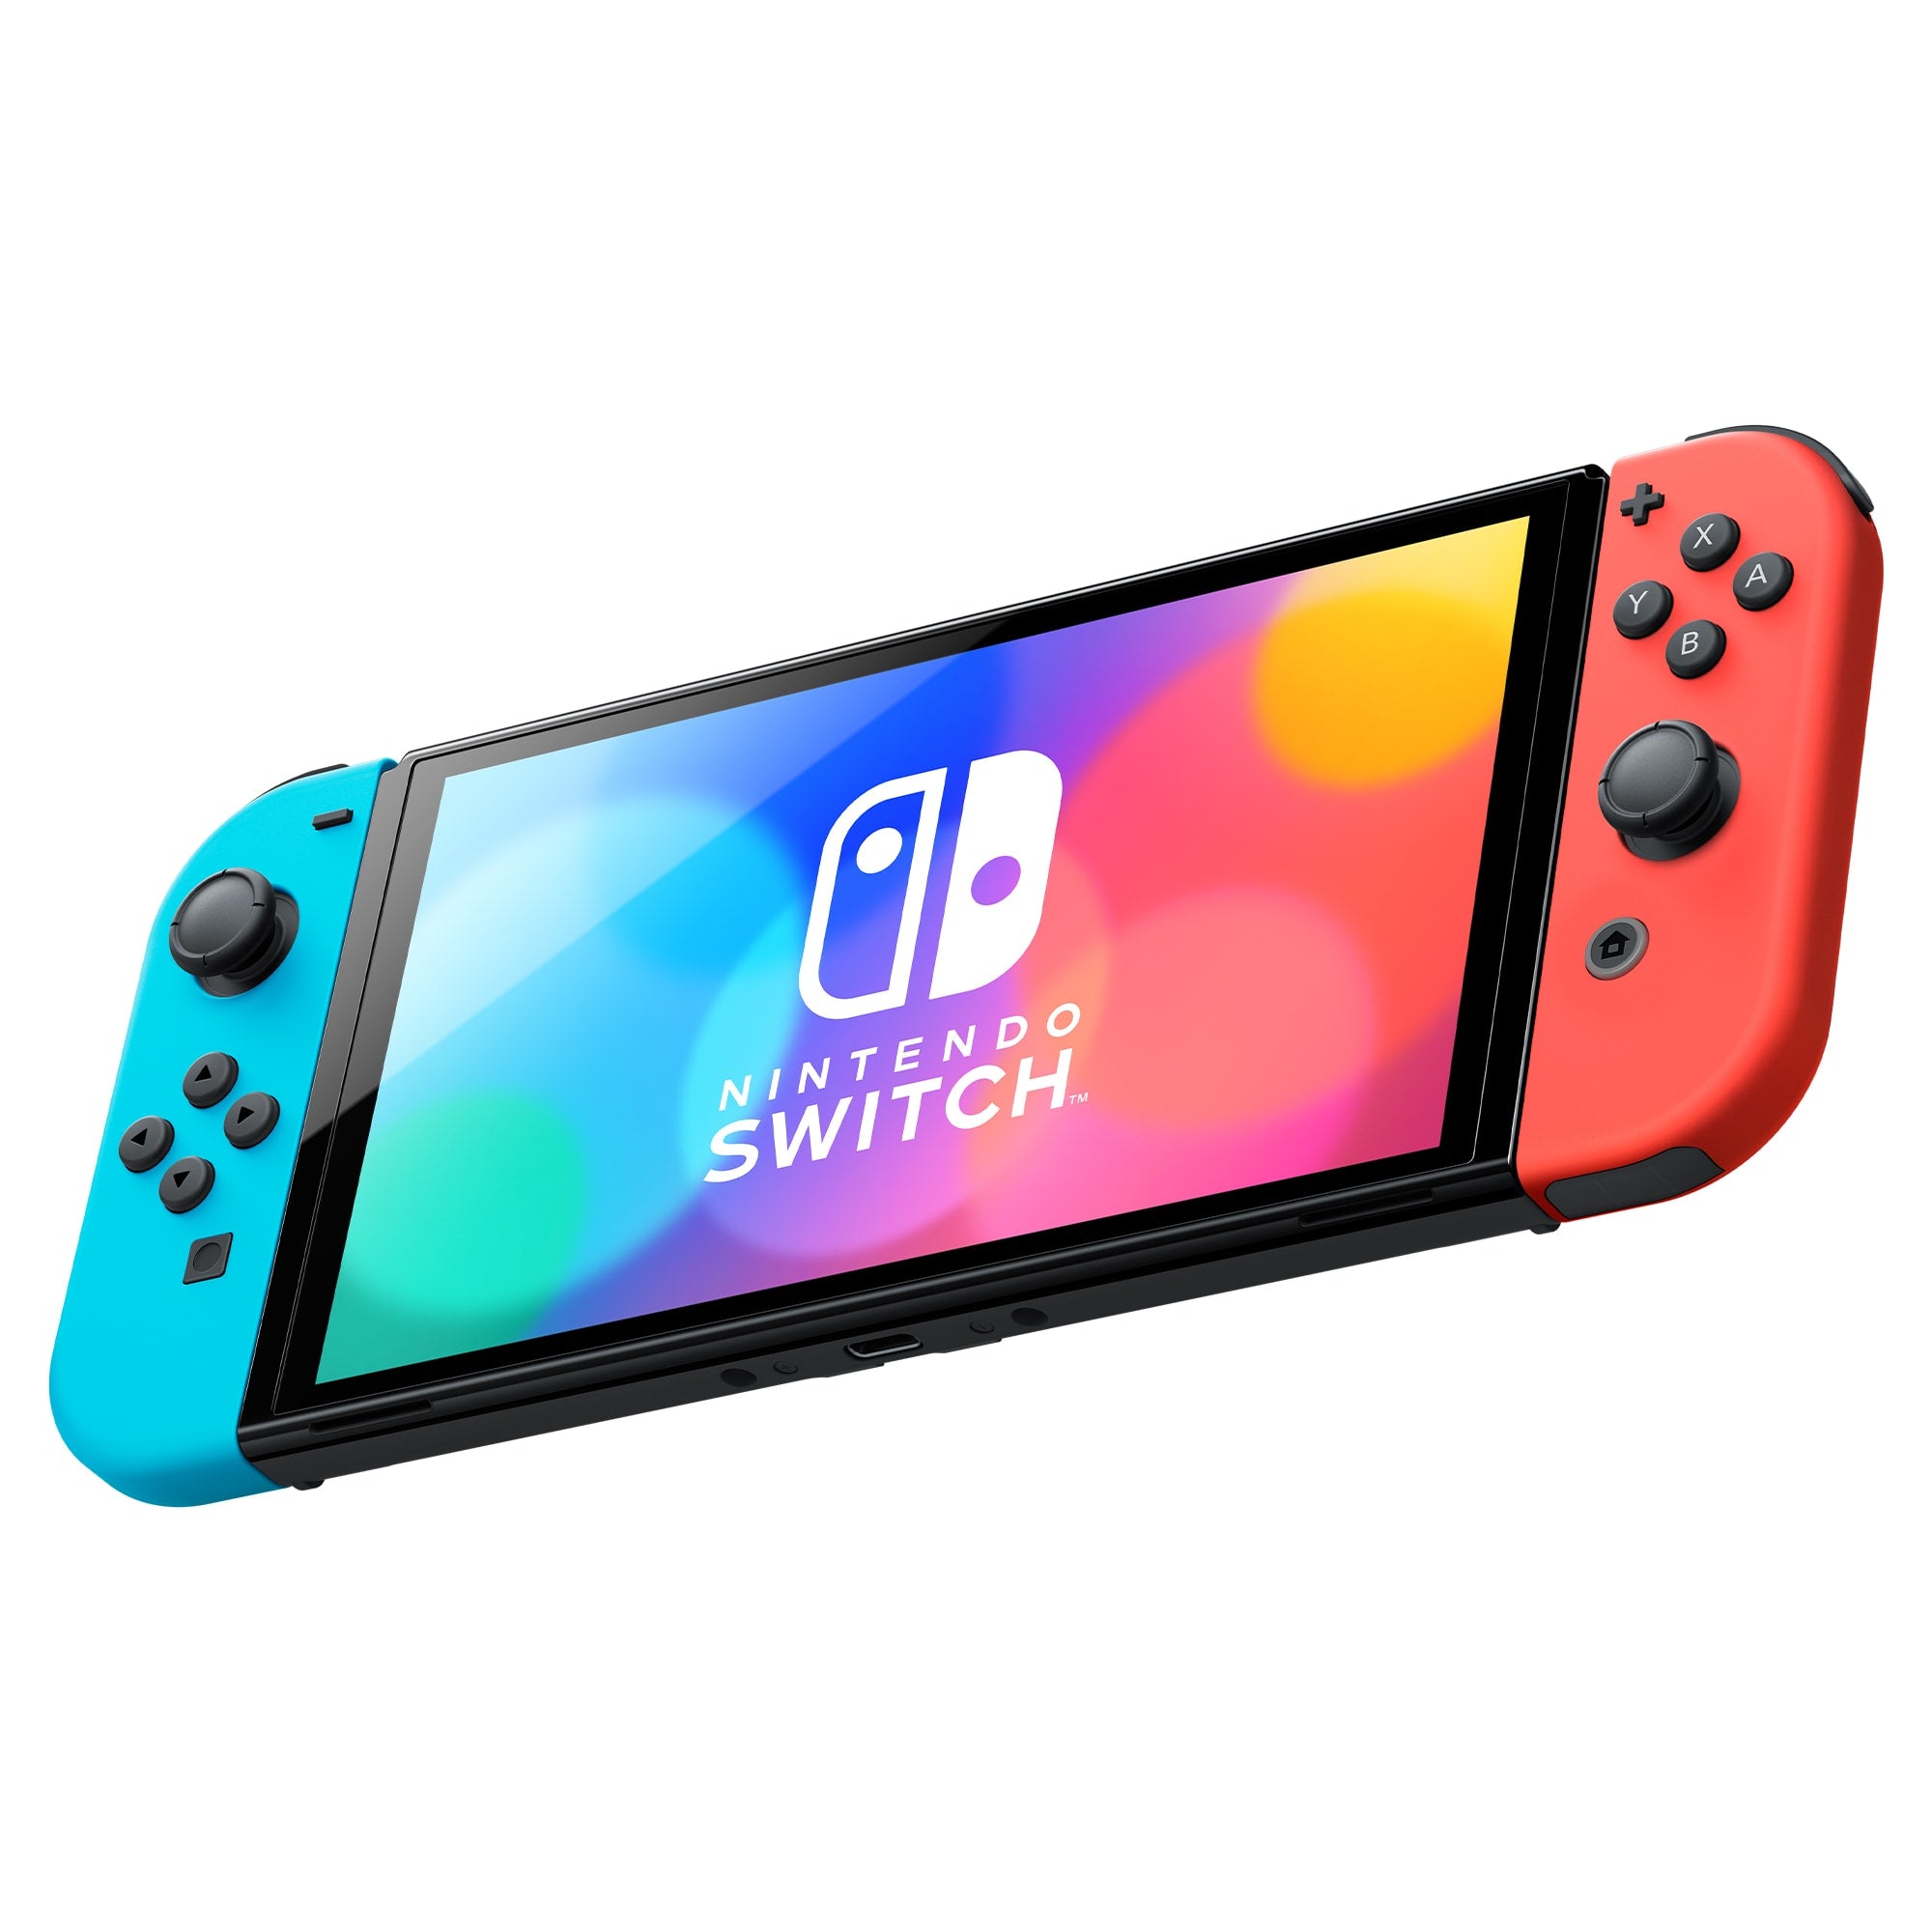 Nintendo Switch OLED Model 64GB, Blue / Red - Refurbished Pristine